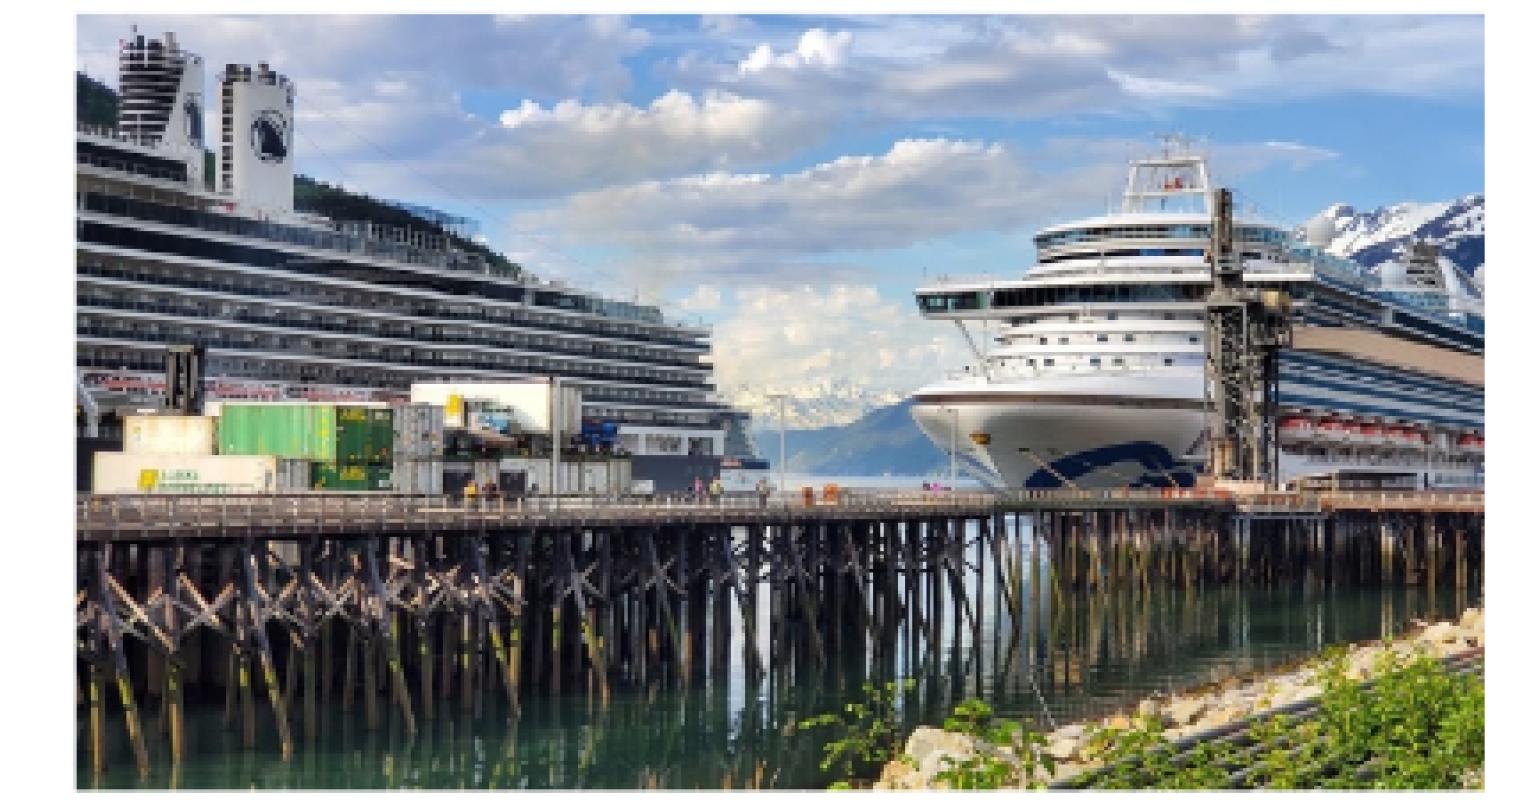 New Skagway dock will boost postPanamax cruise ship capacity